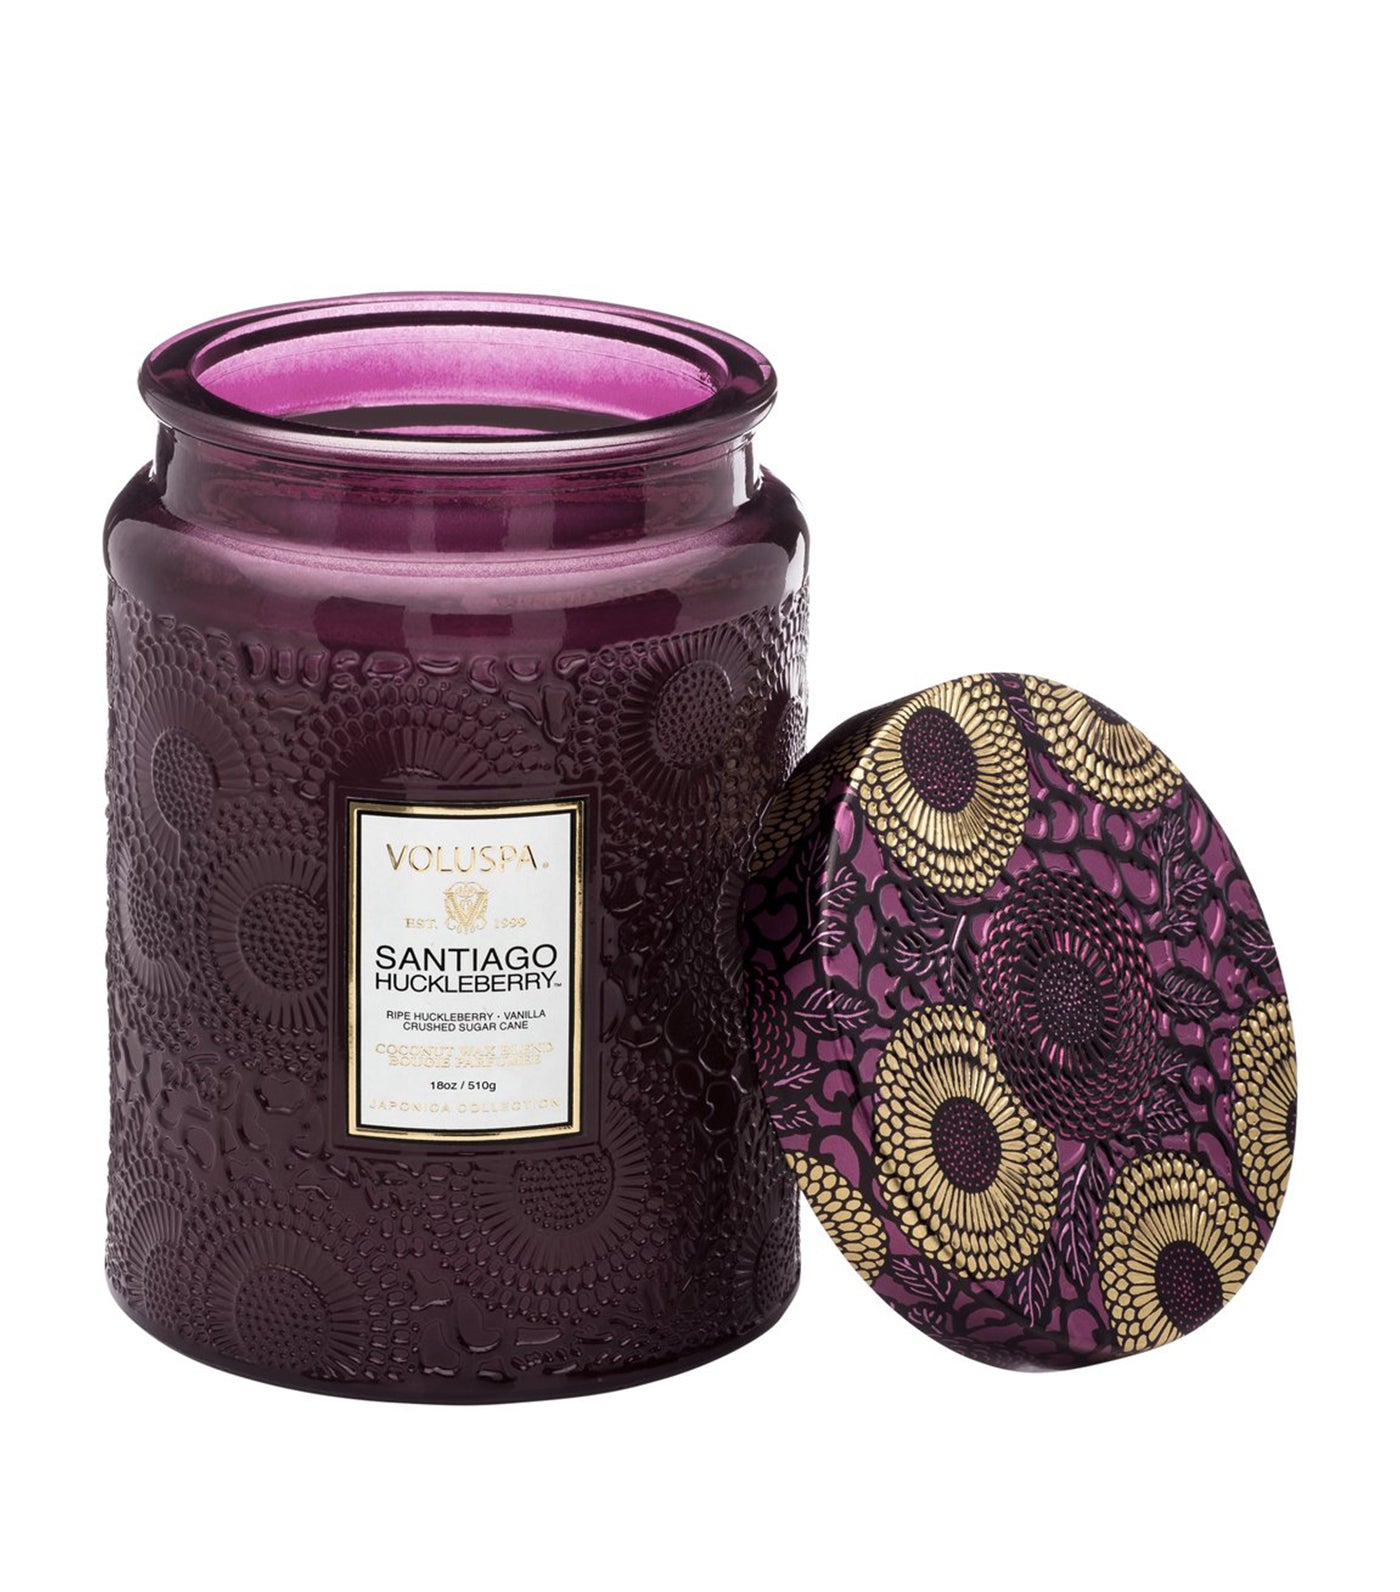 voluspa santiago huckleberry - large jar candle